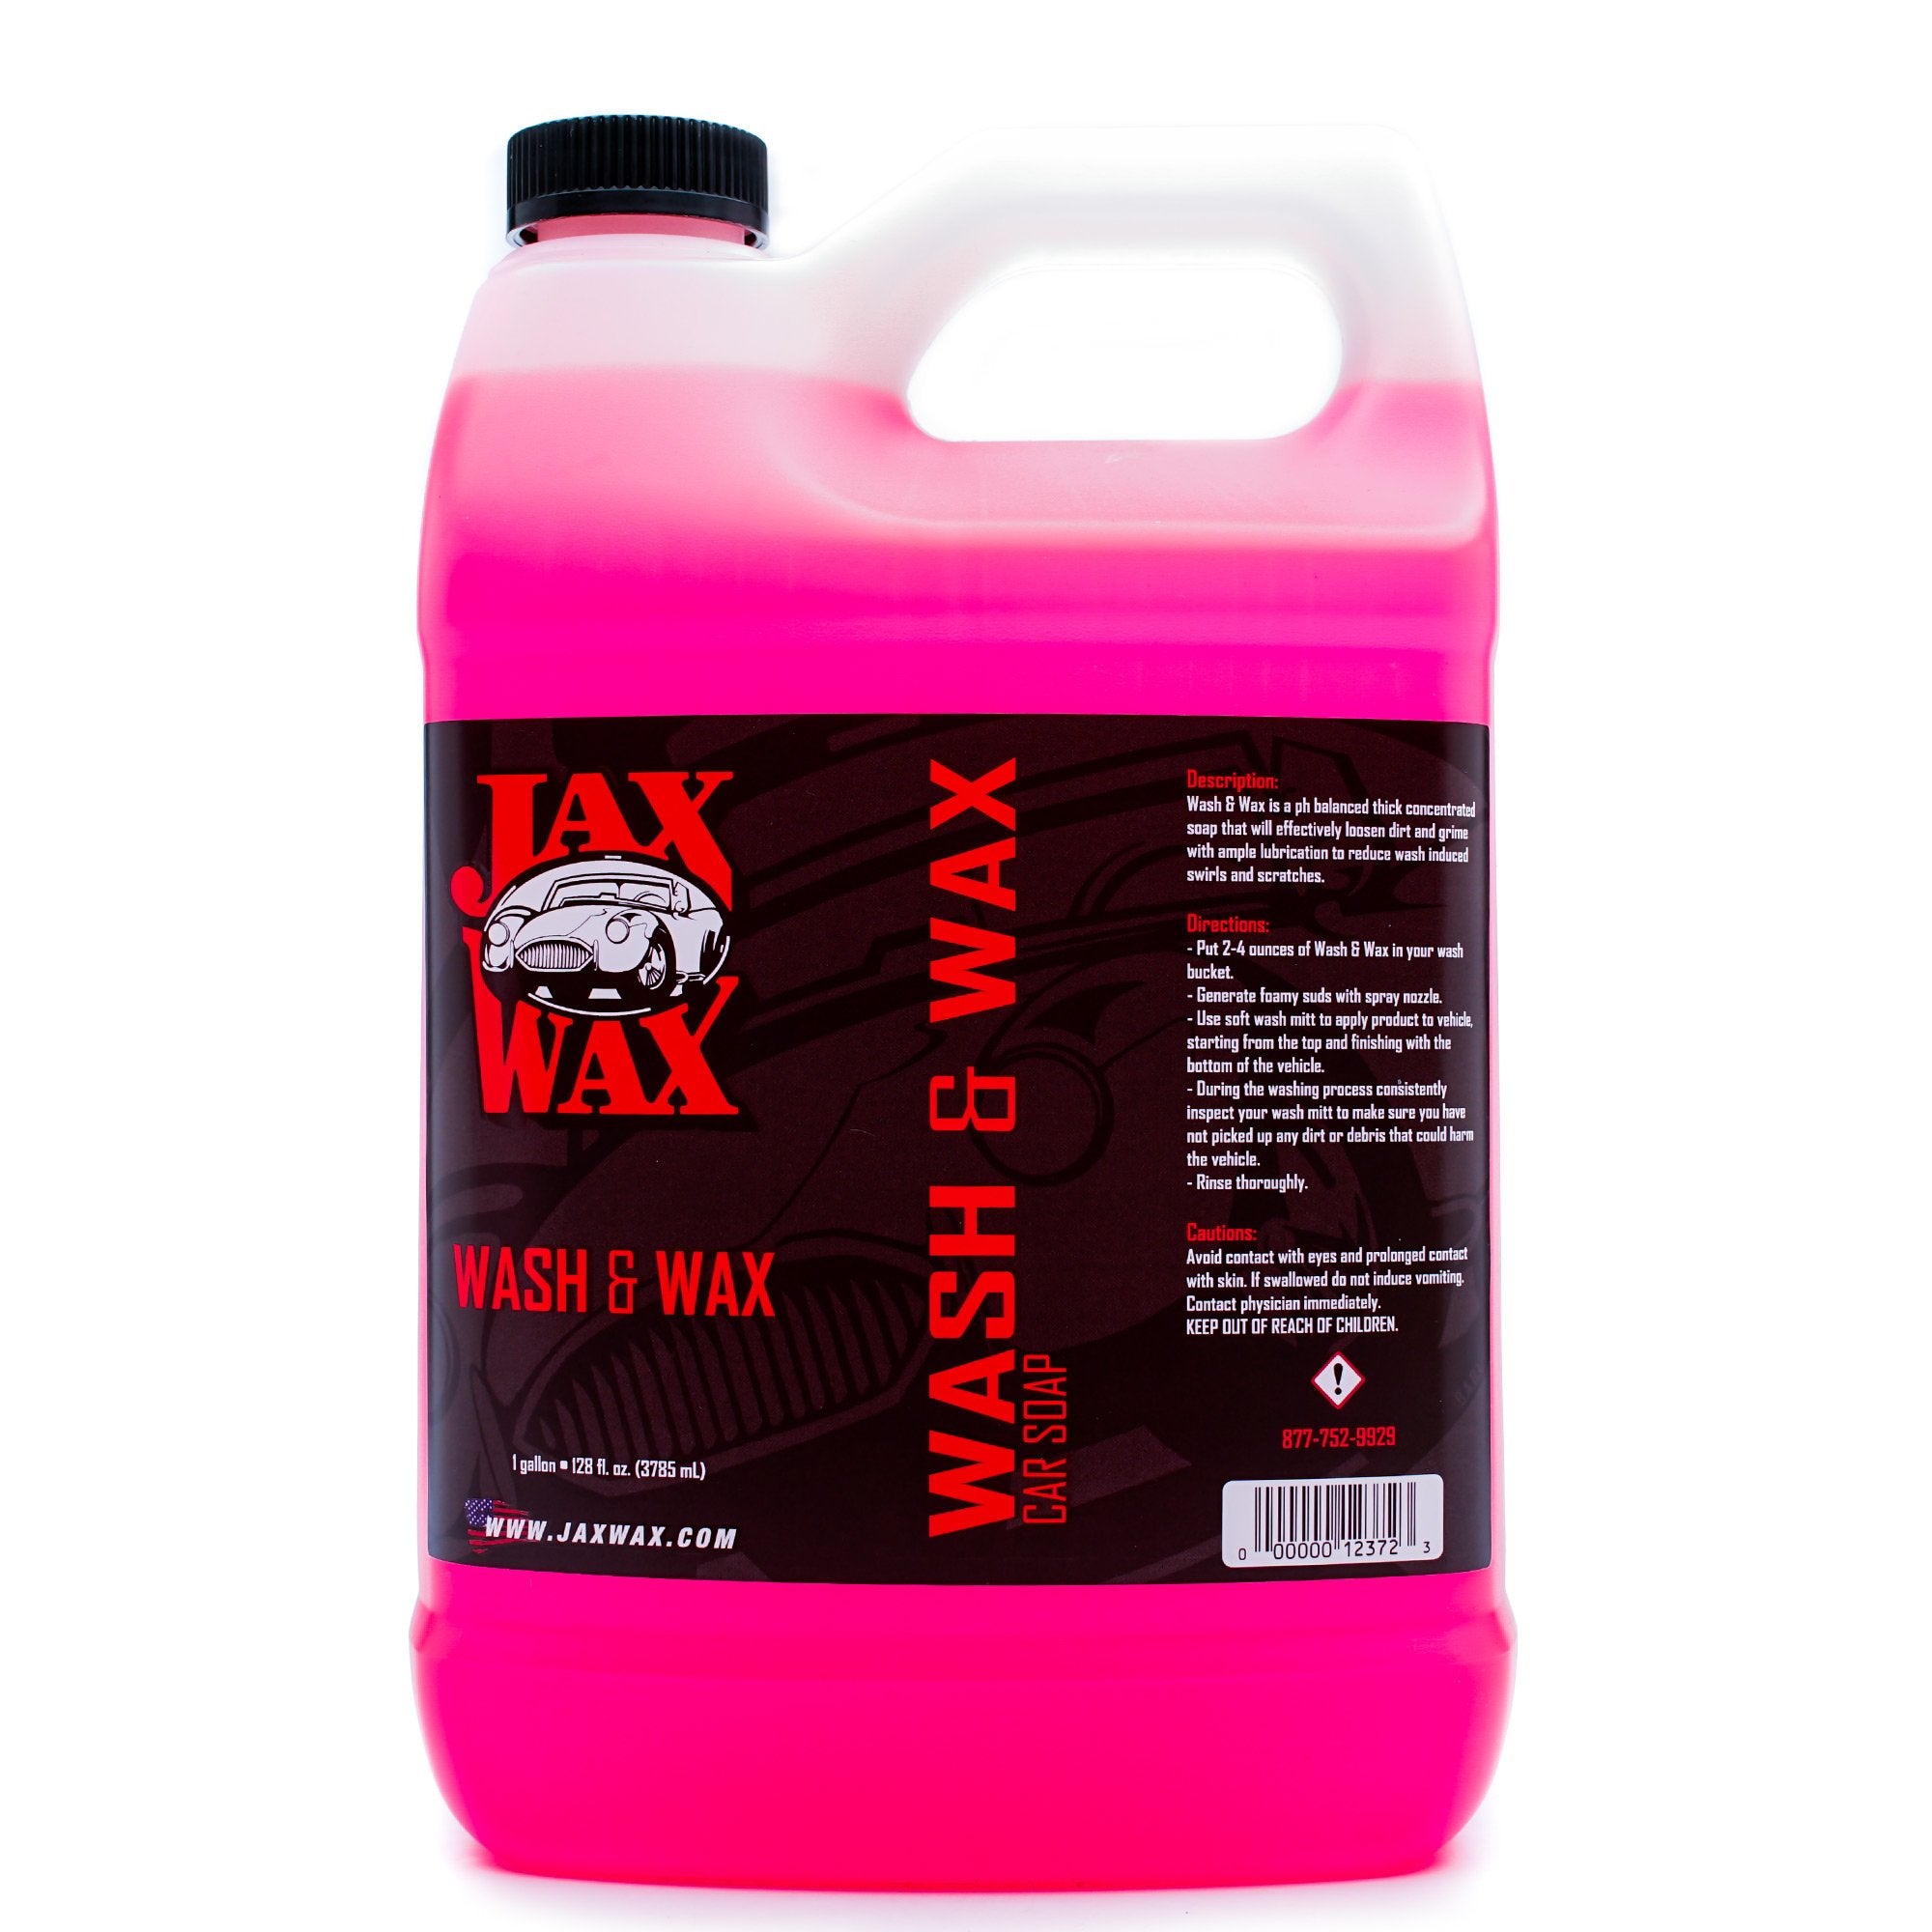 RINSELESS WASH – Jax Wax of Arizona